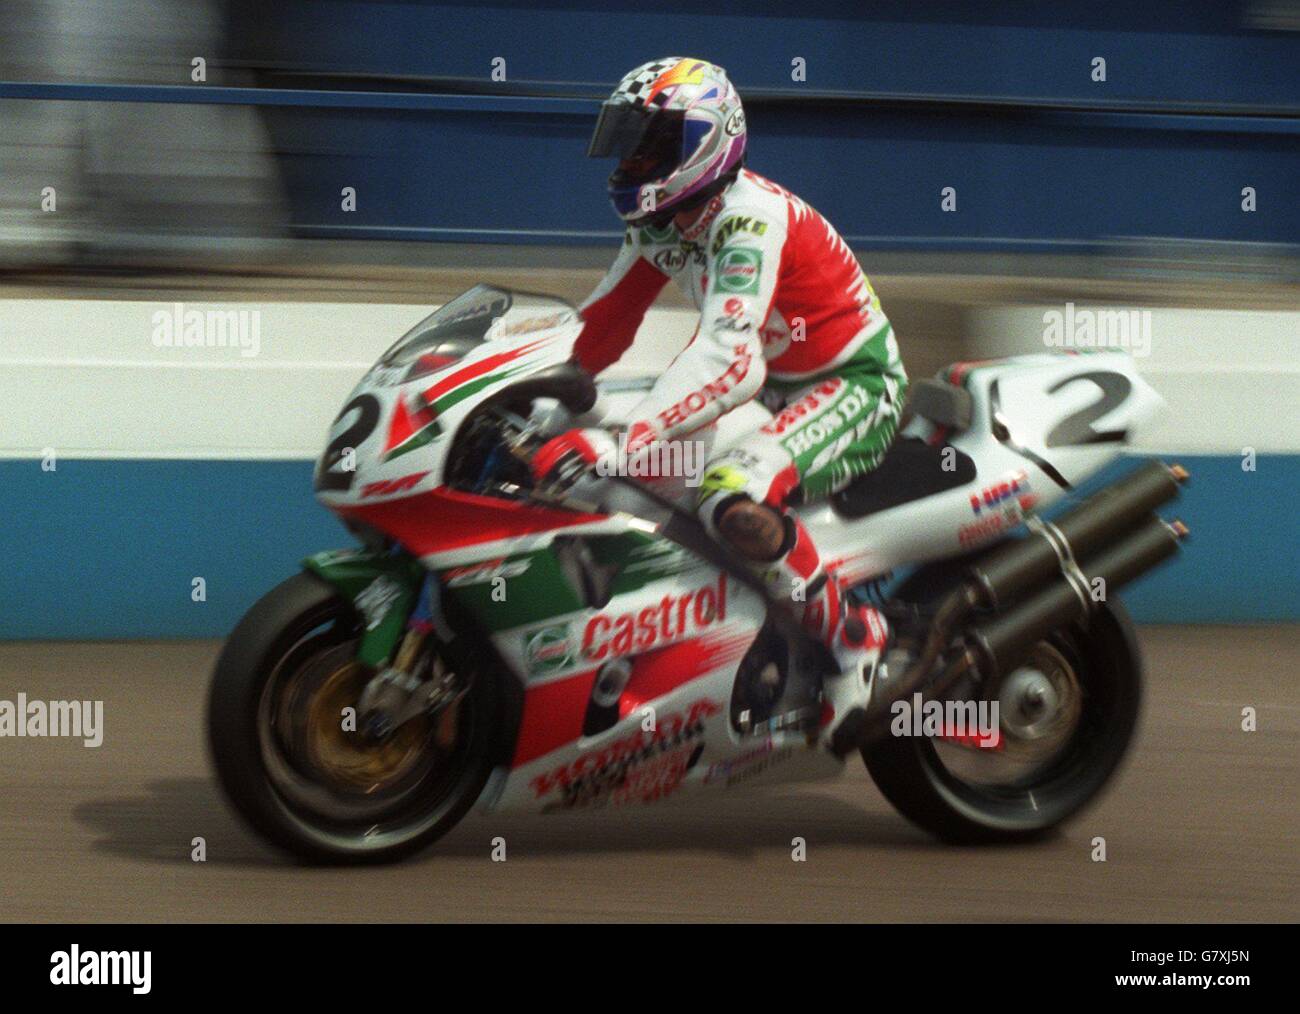 Motor Sports ... Superbike World Championship, Donnington Park Stock Photo